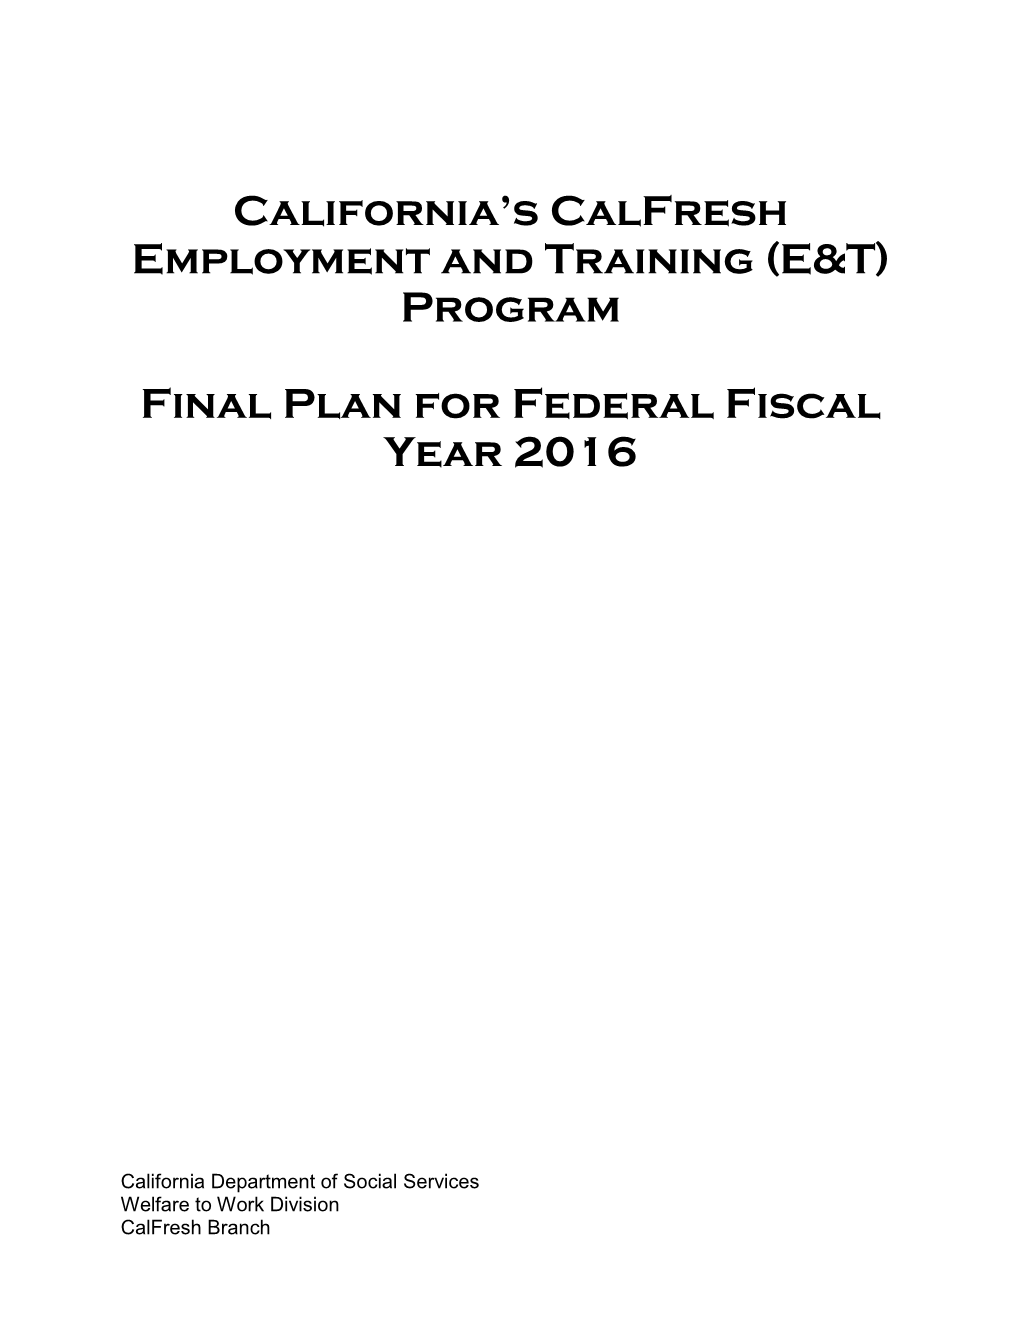 California's Calfresh Employment and Training (E&T) Program